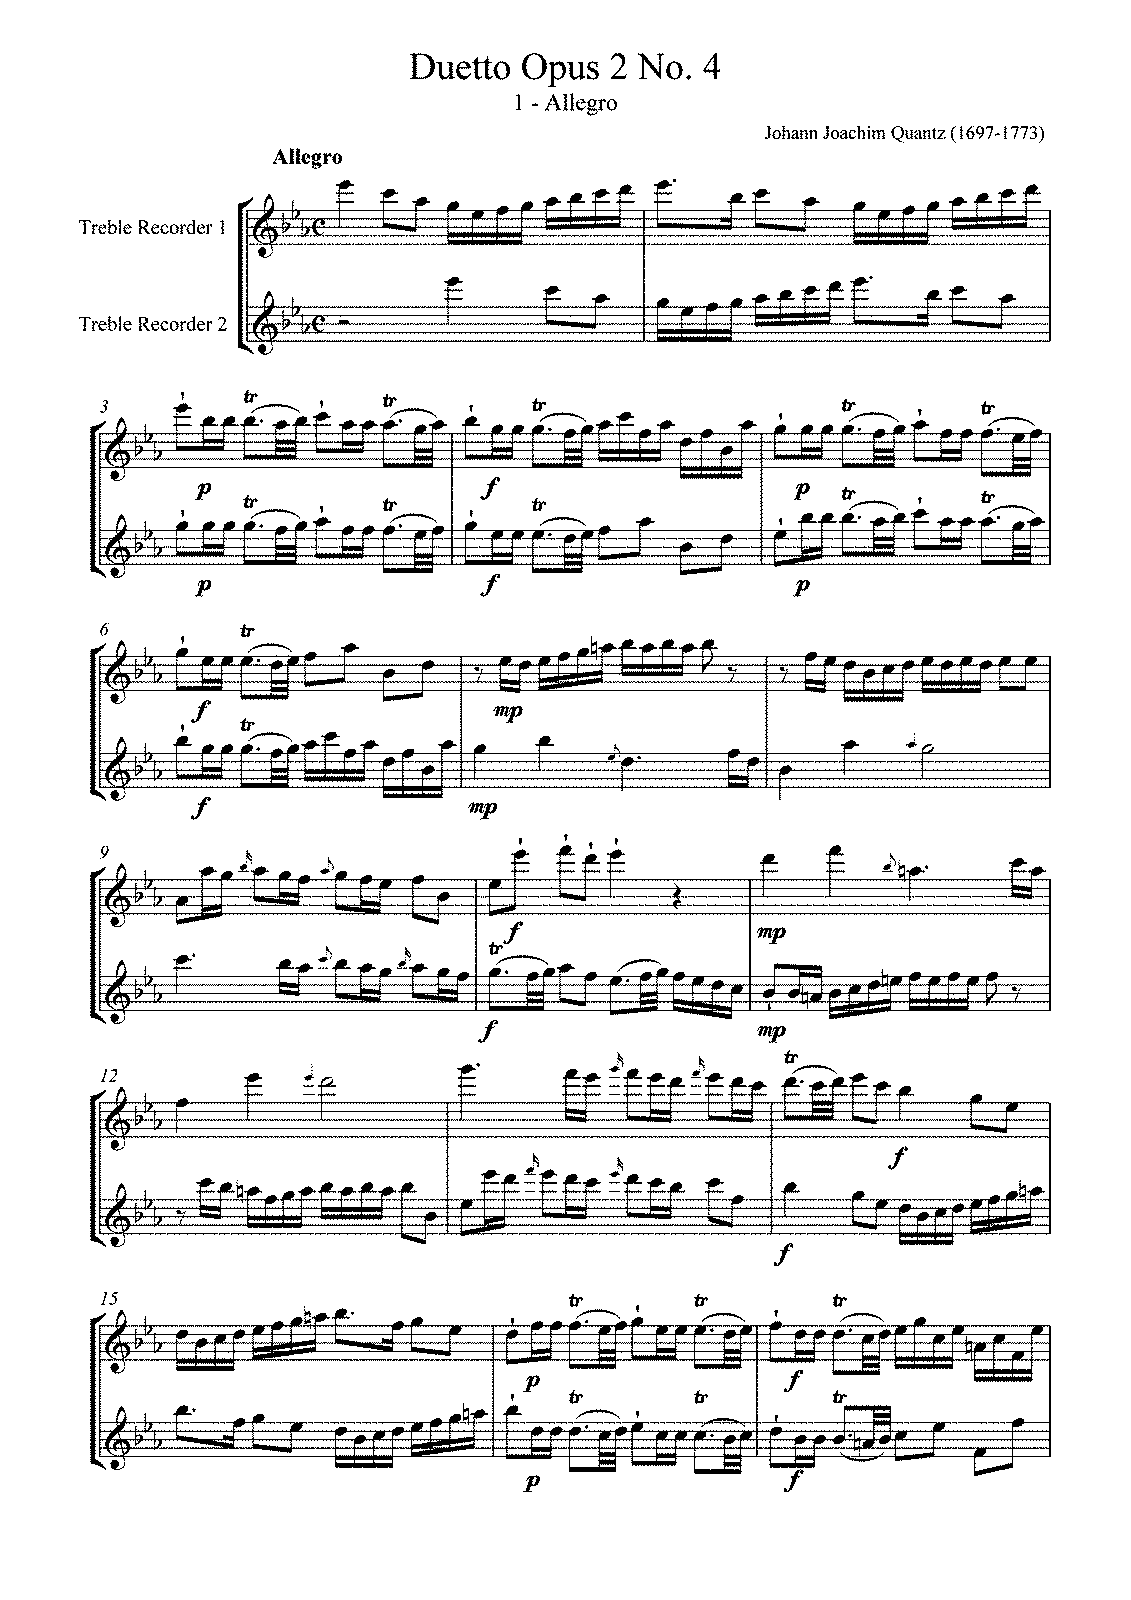 6 Duets for 2 Flutes, QV 3:2 (Quantz, Johann Joachim) - IMSLP